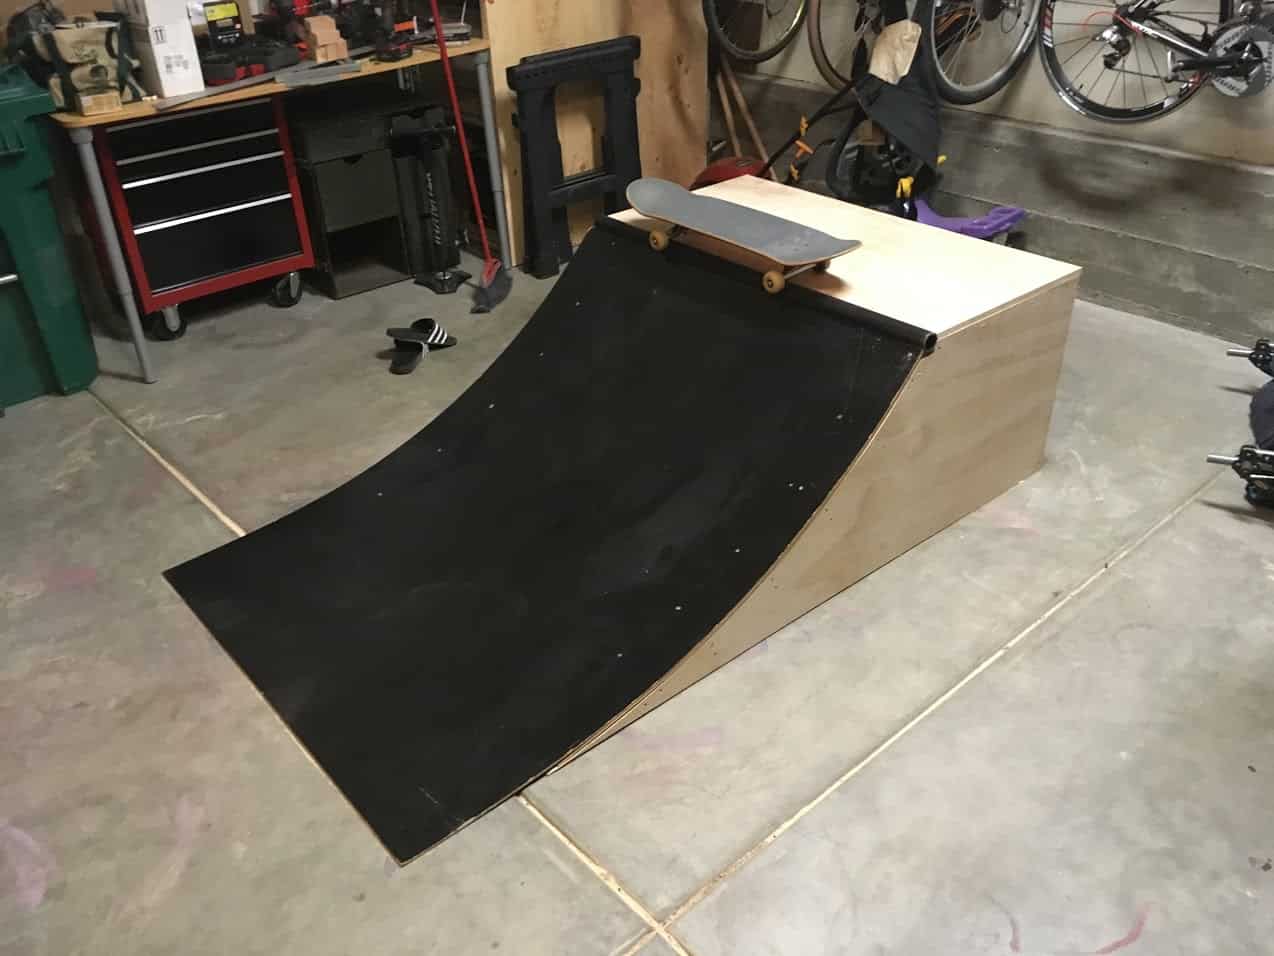 Garage Quarter Pipe Building a Micro Skate Ramp